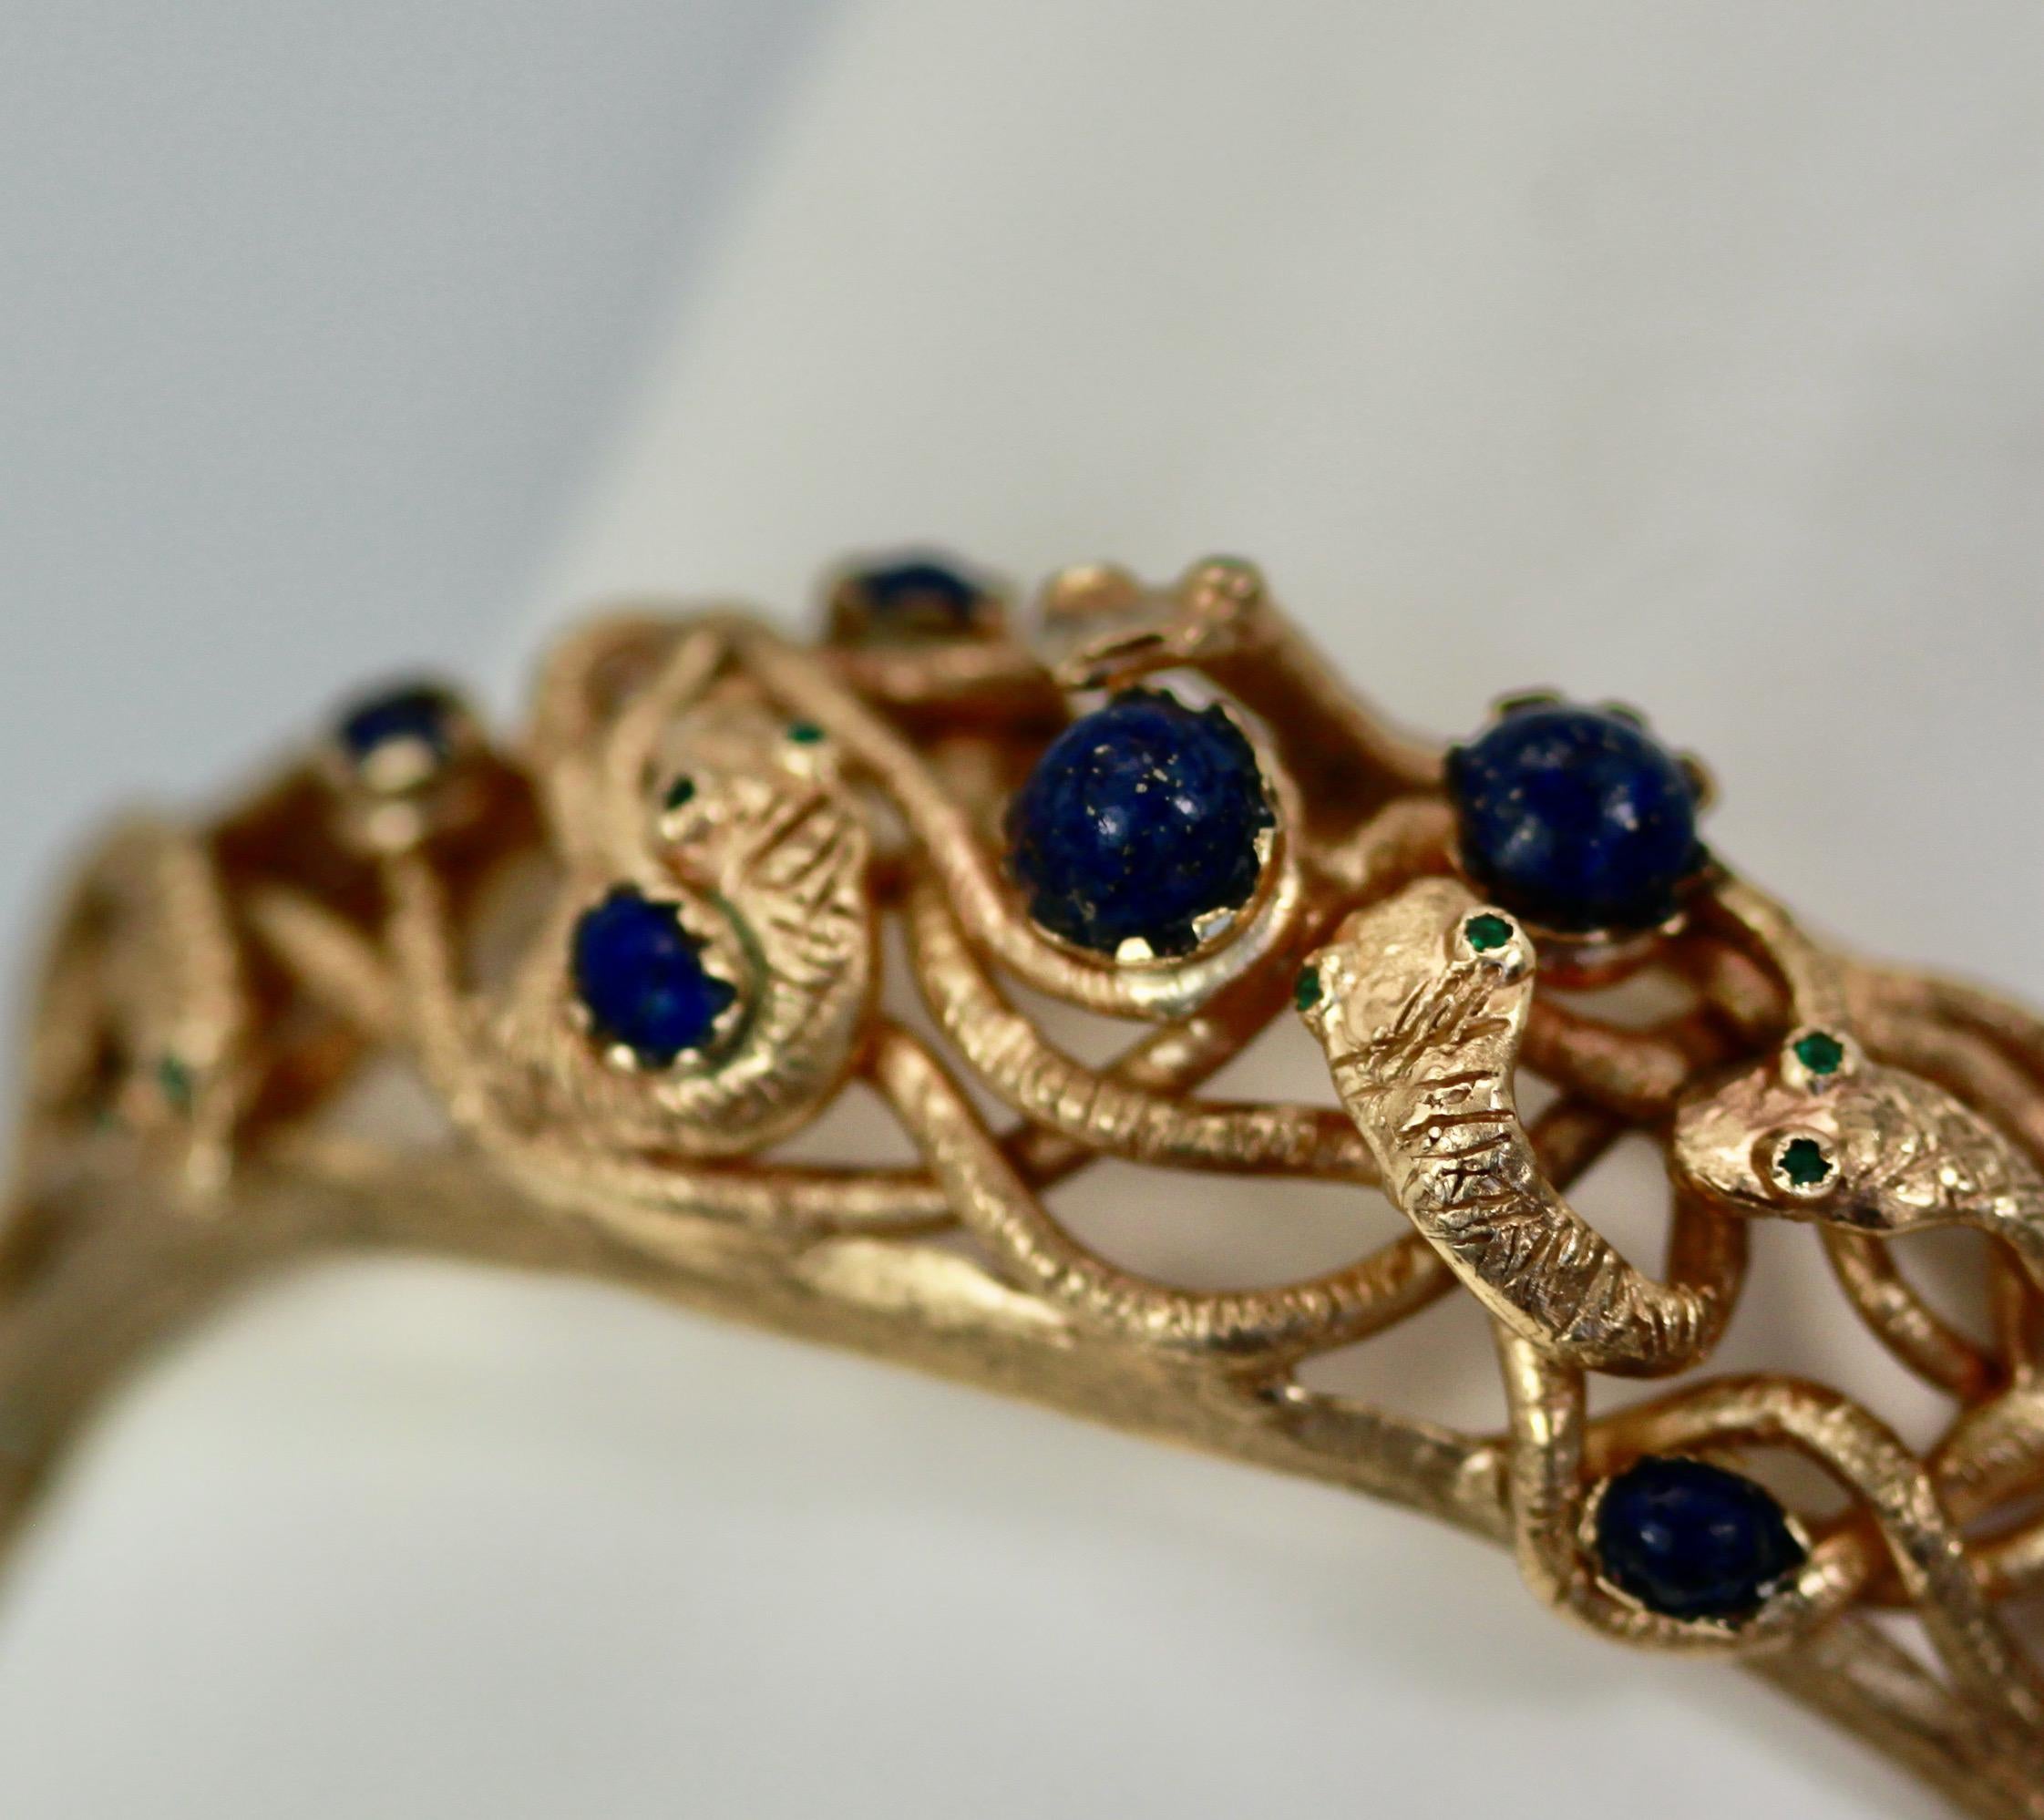 gold snake bracelet